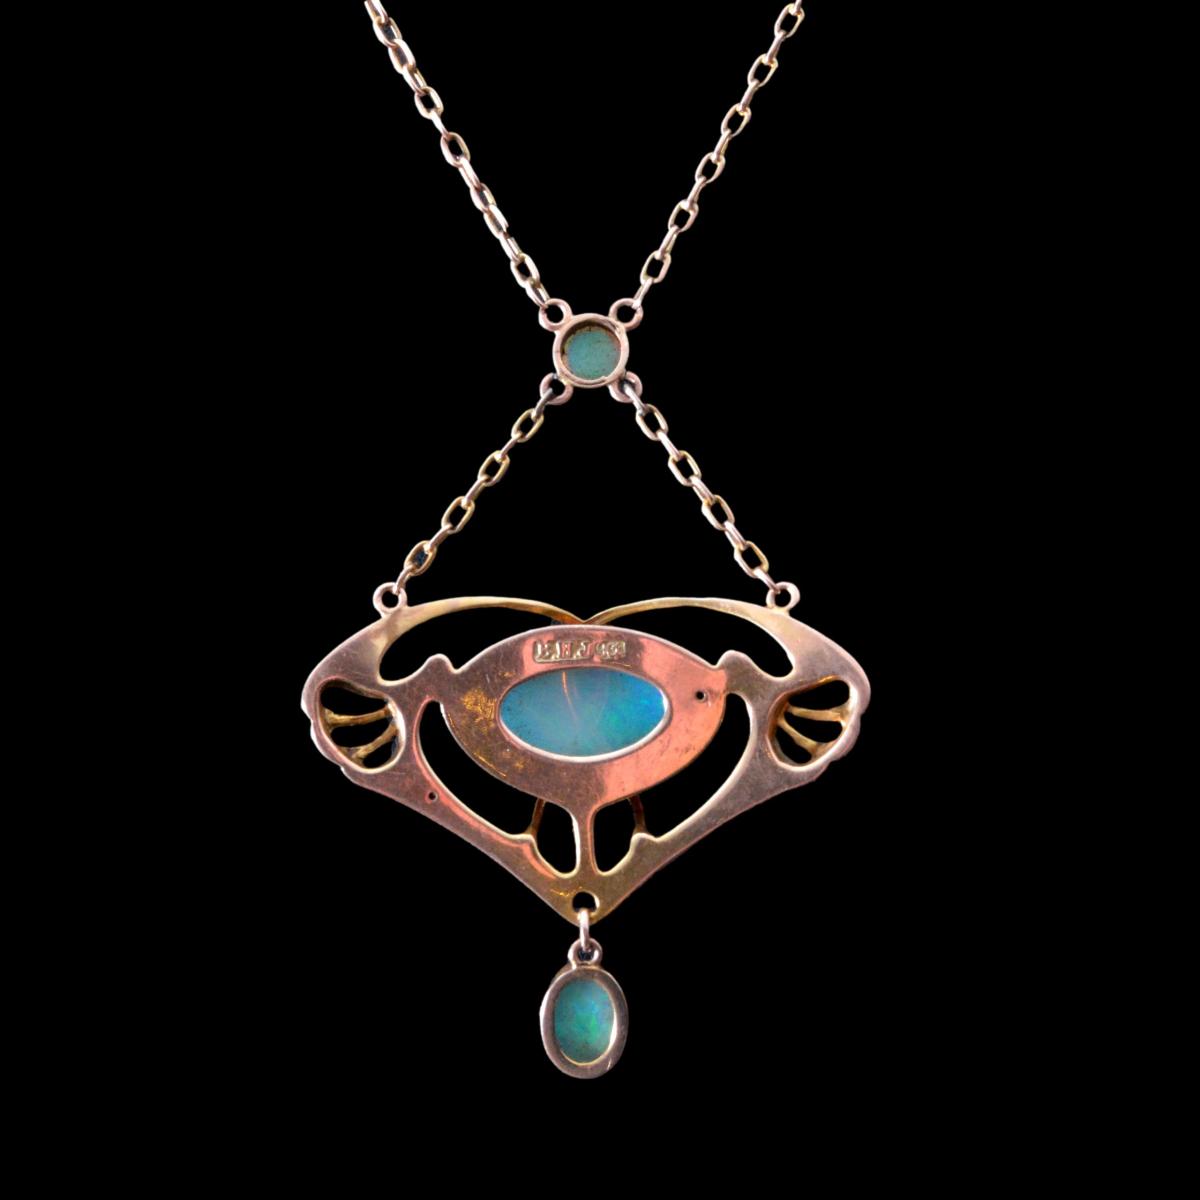 A Barnet Henry Joseph gold and opal pendant